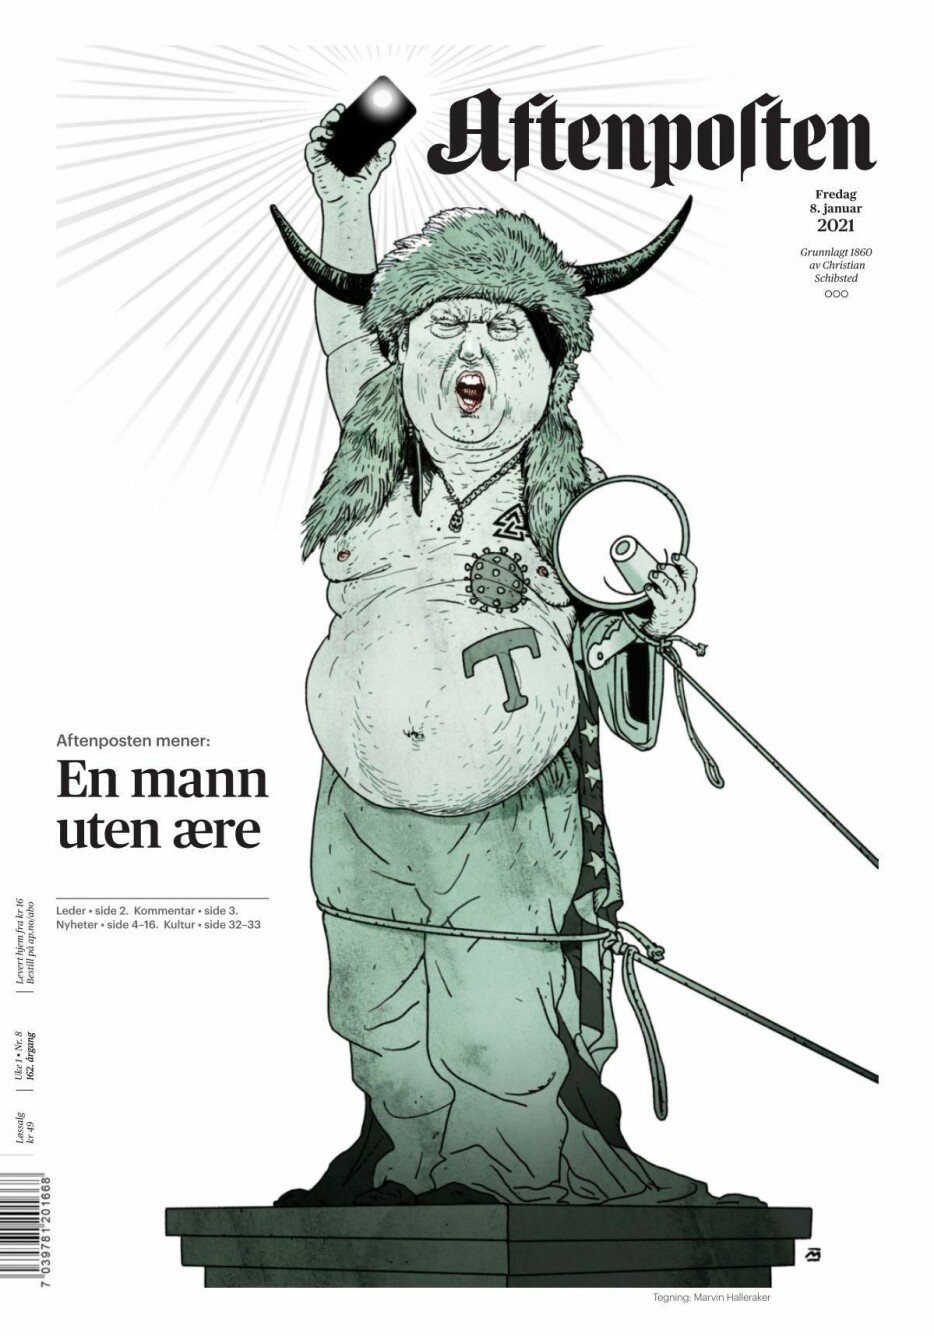 Fredagens papiravis-forside i Aftenposten.